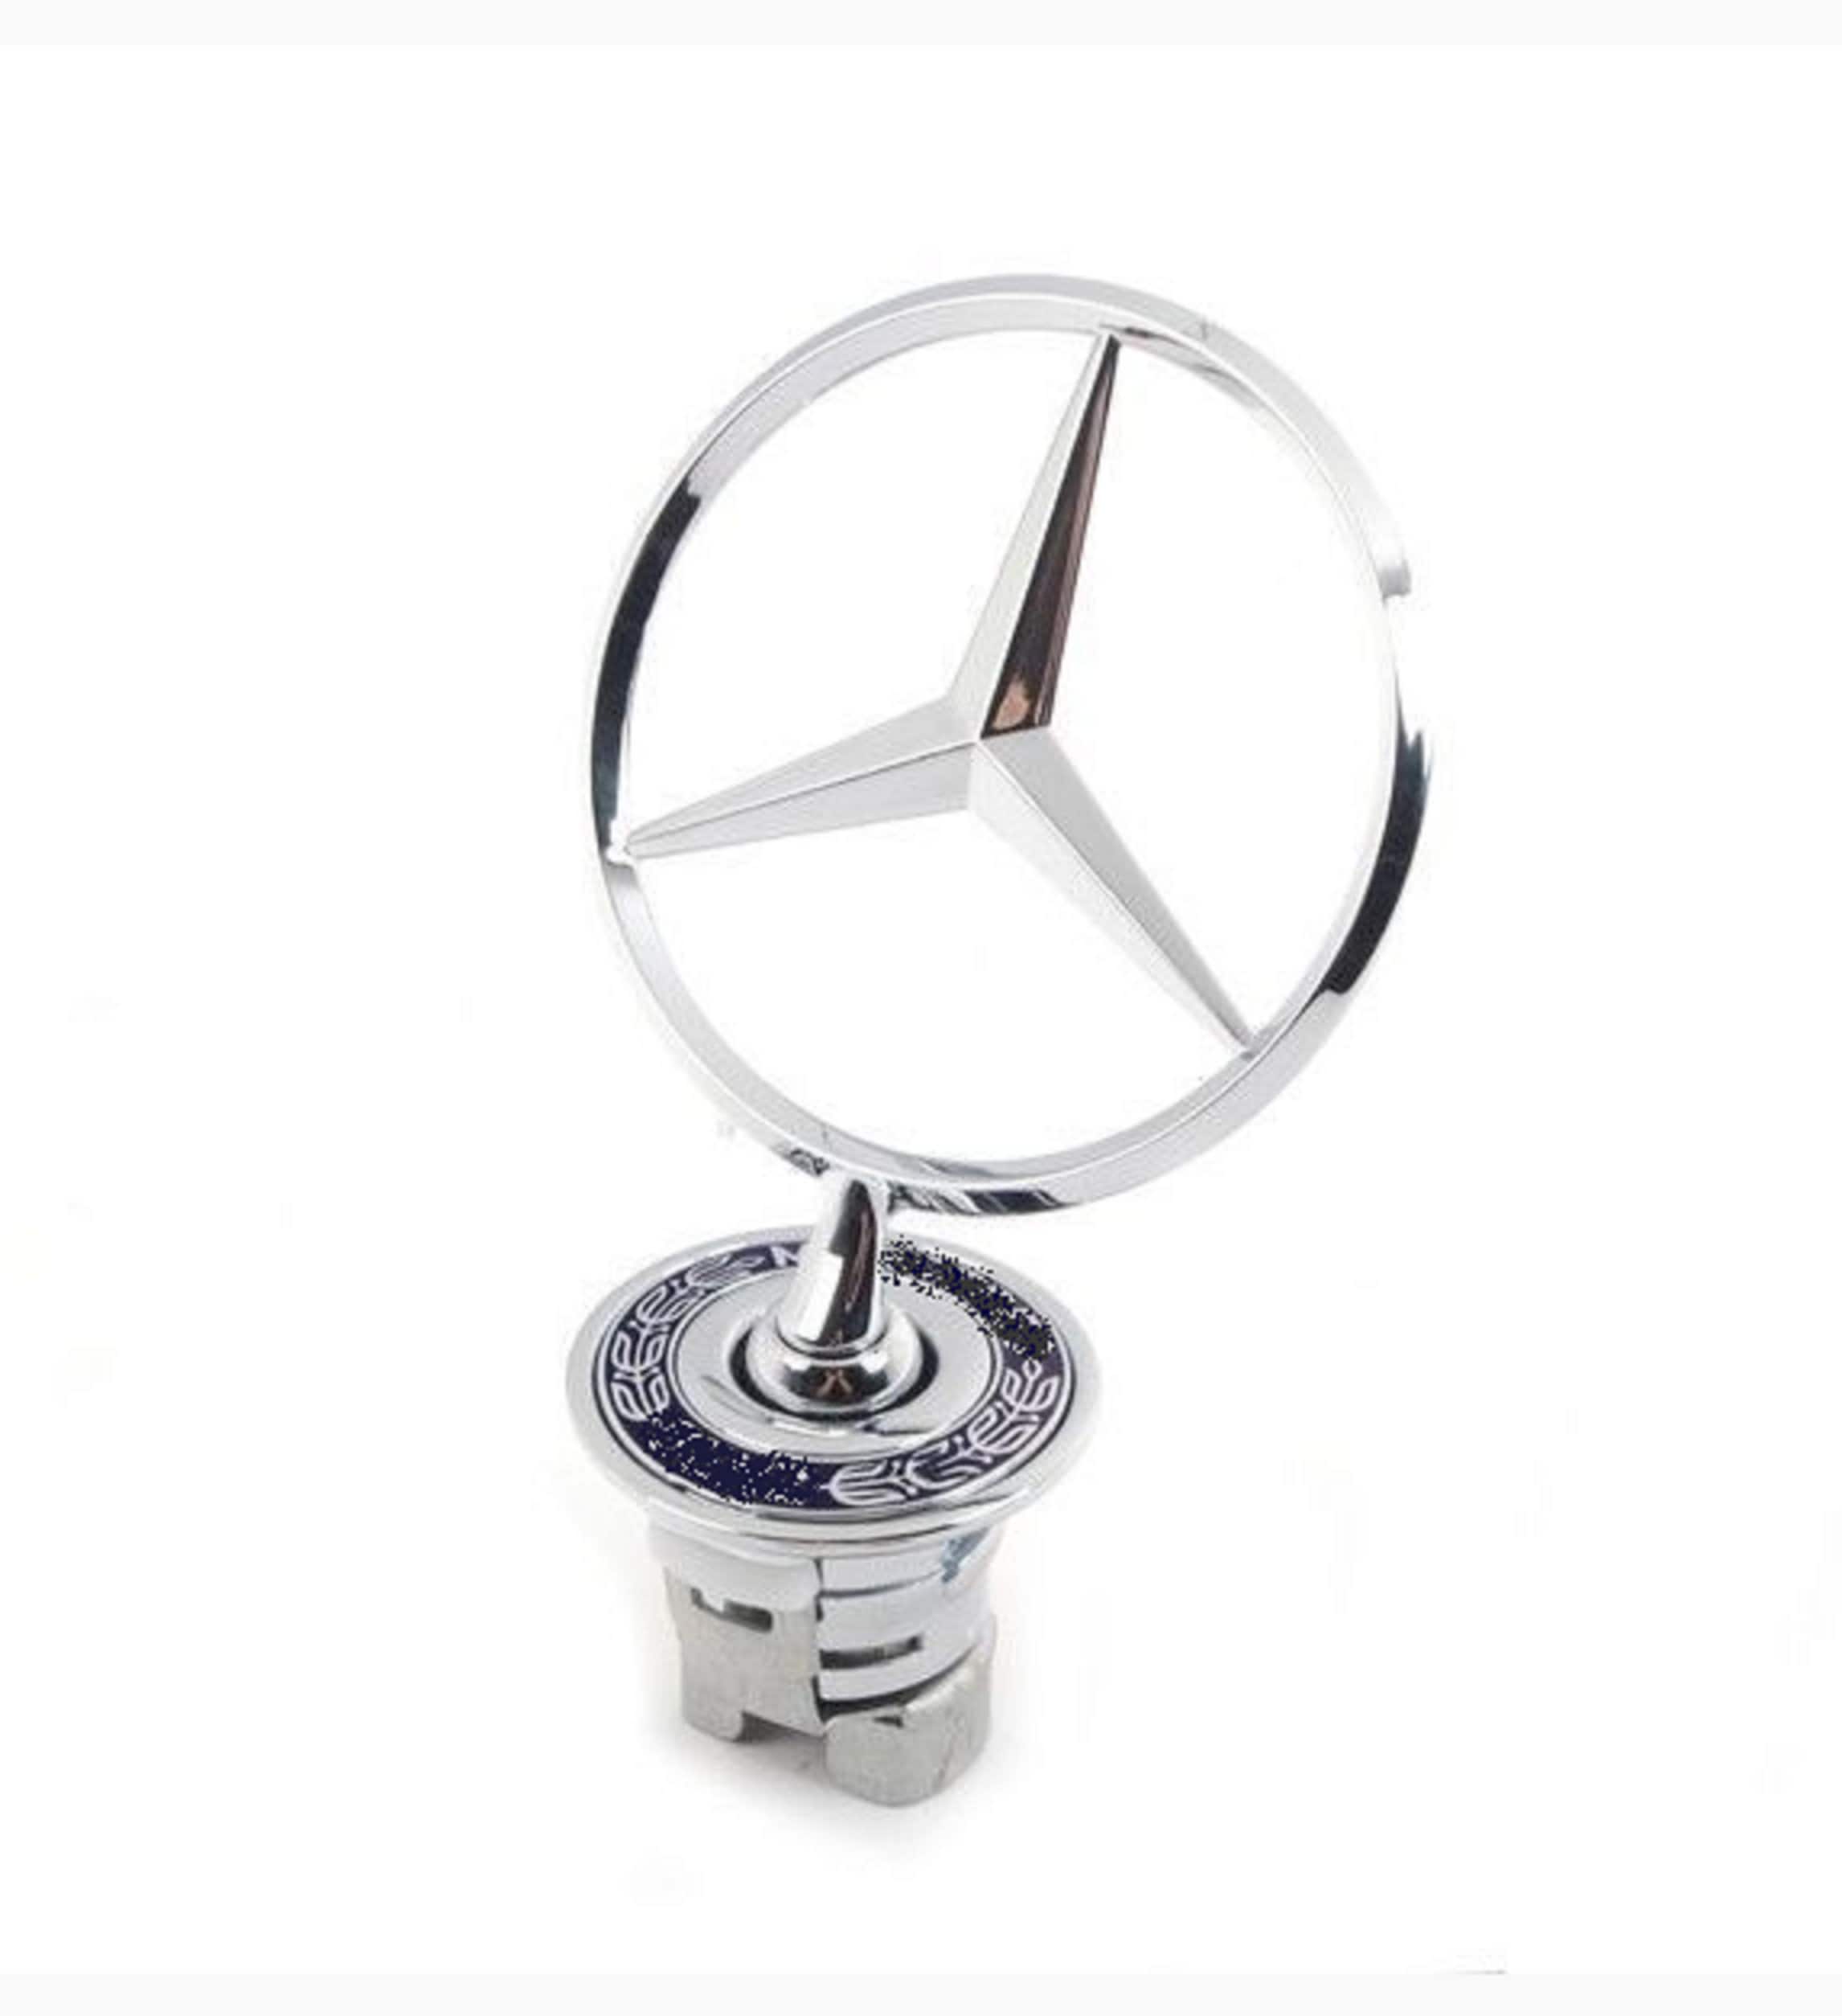 Stern Mercedes Benz Elektronisch Motorisiert mit Fernbedienung  Garantieemblem Offizielles Anti-Diebstahl-Abzeichen Offizielle  Fernbedienung 